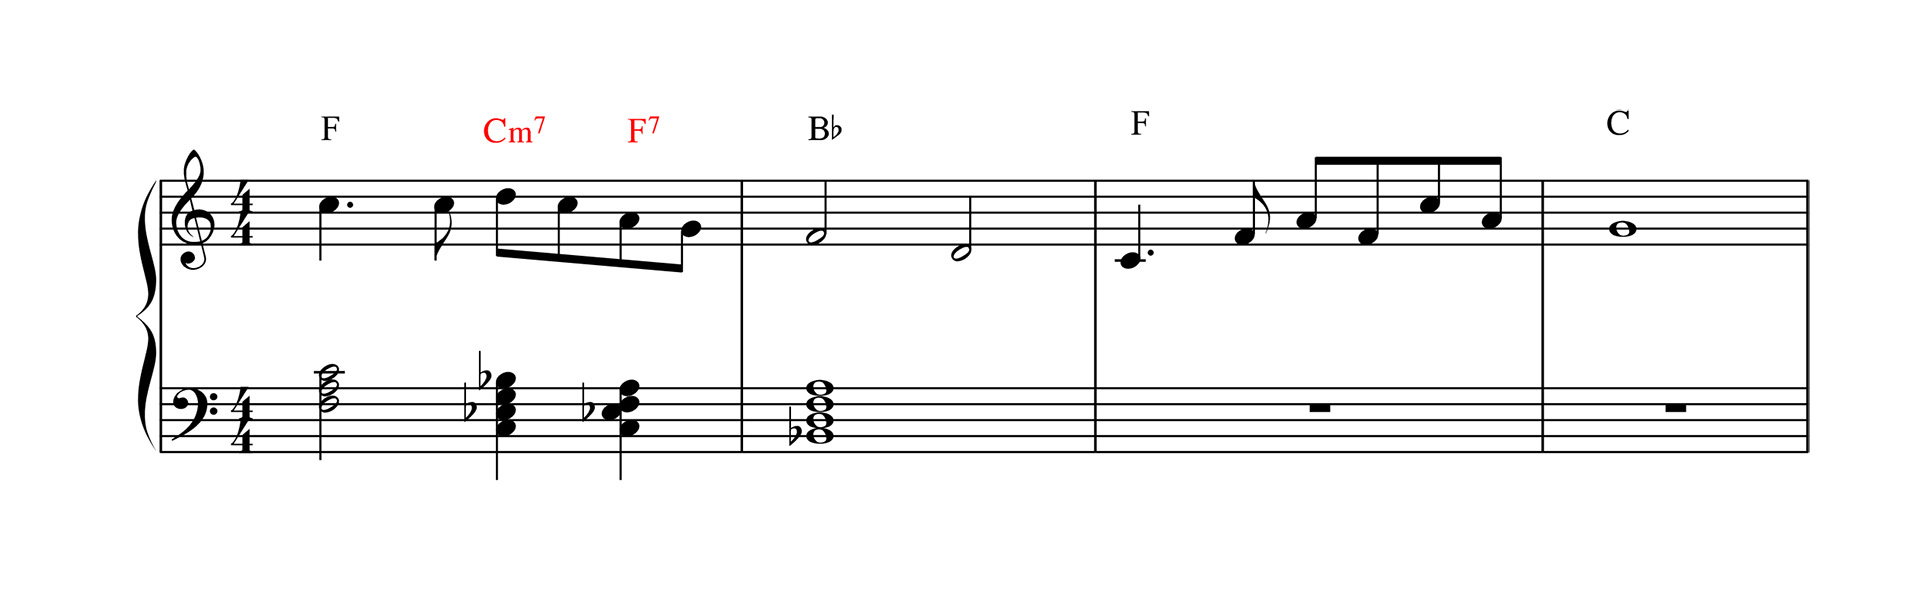 basic 251 passing chord in gospel hymn